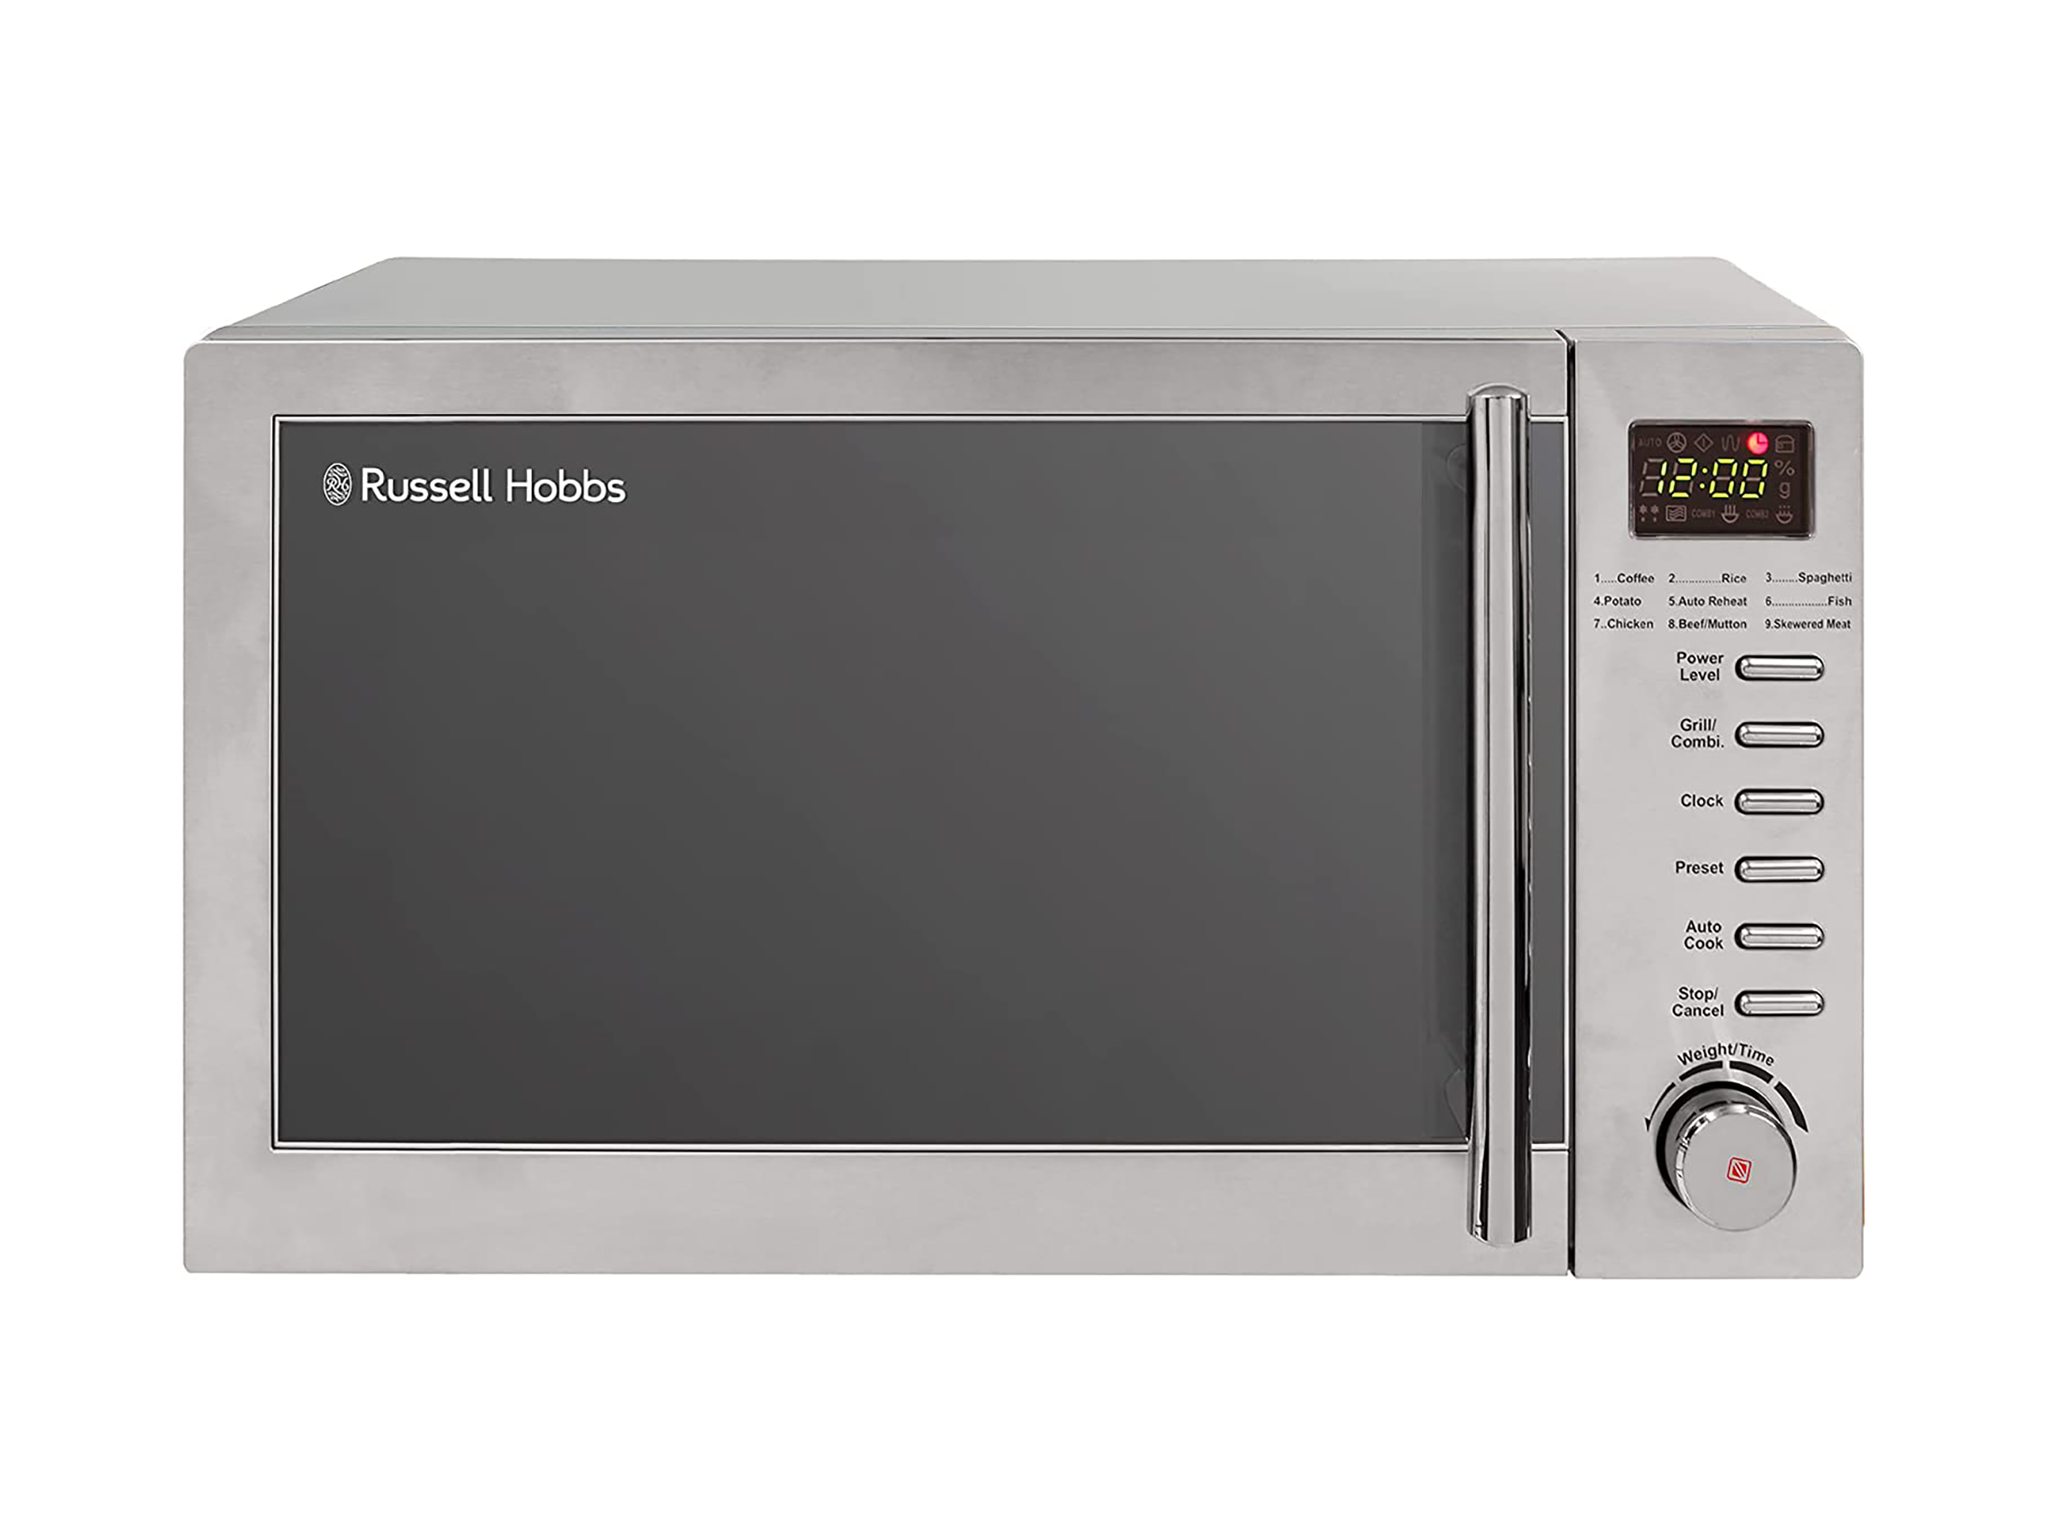 Microwaves - Shop Kitchen Appliances Online in UK